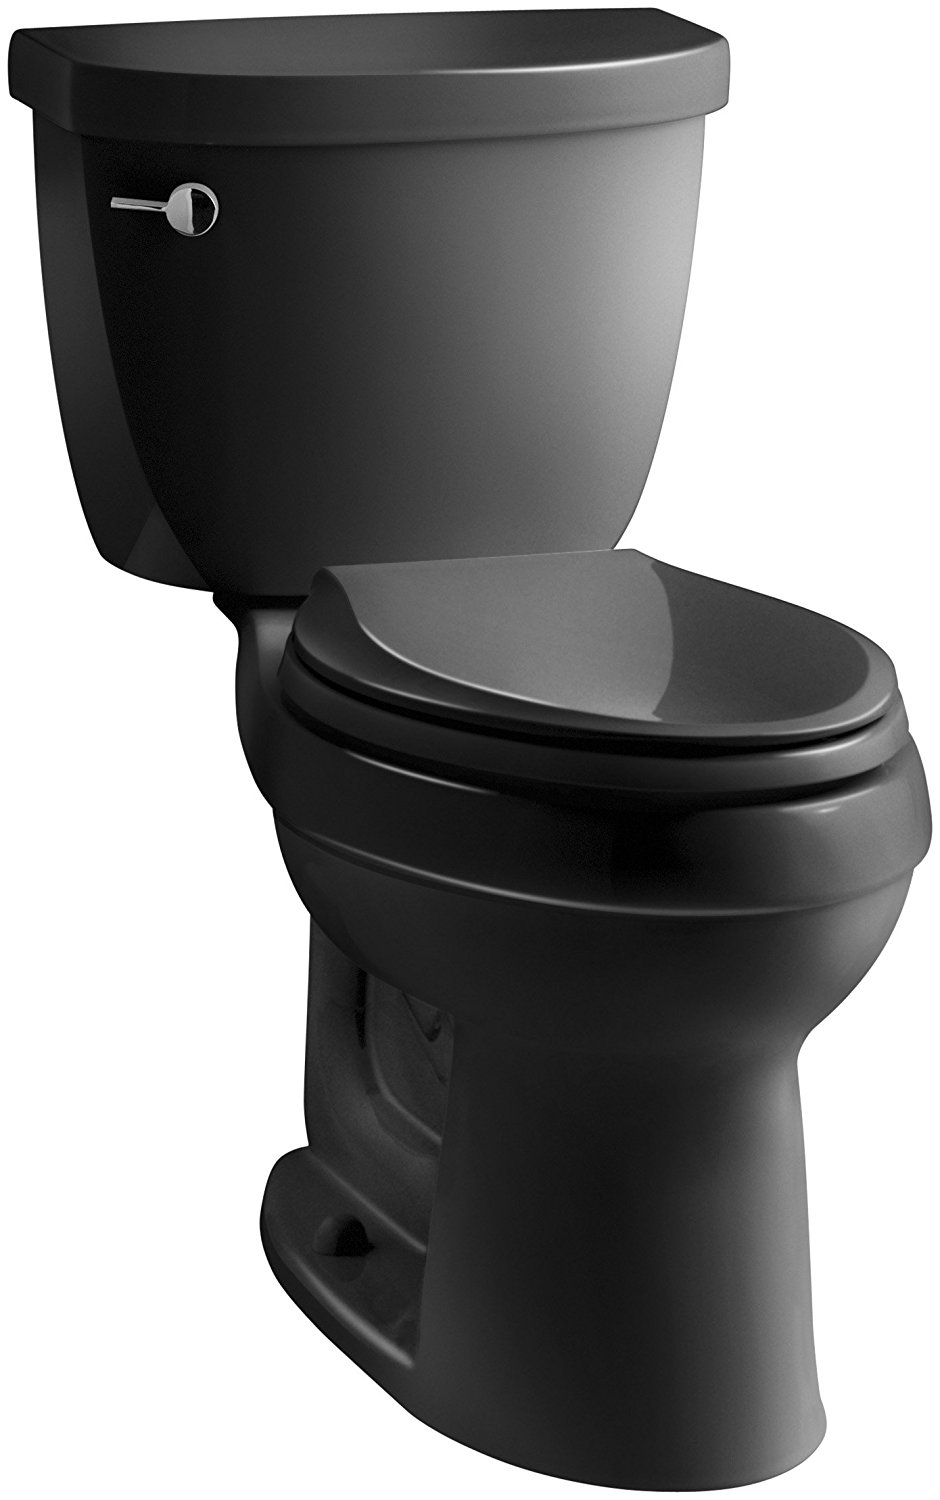 KOHLER K-3609-7 Cimarron Comfort Height Elongated 1.28 gpf Toilet with AquaPiston Technology, Less Seat, Black Black